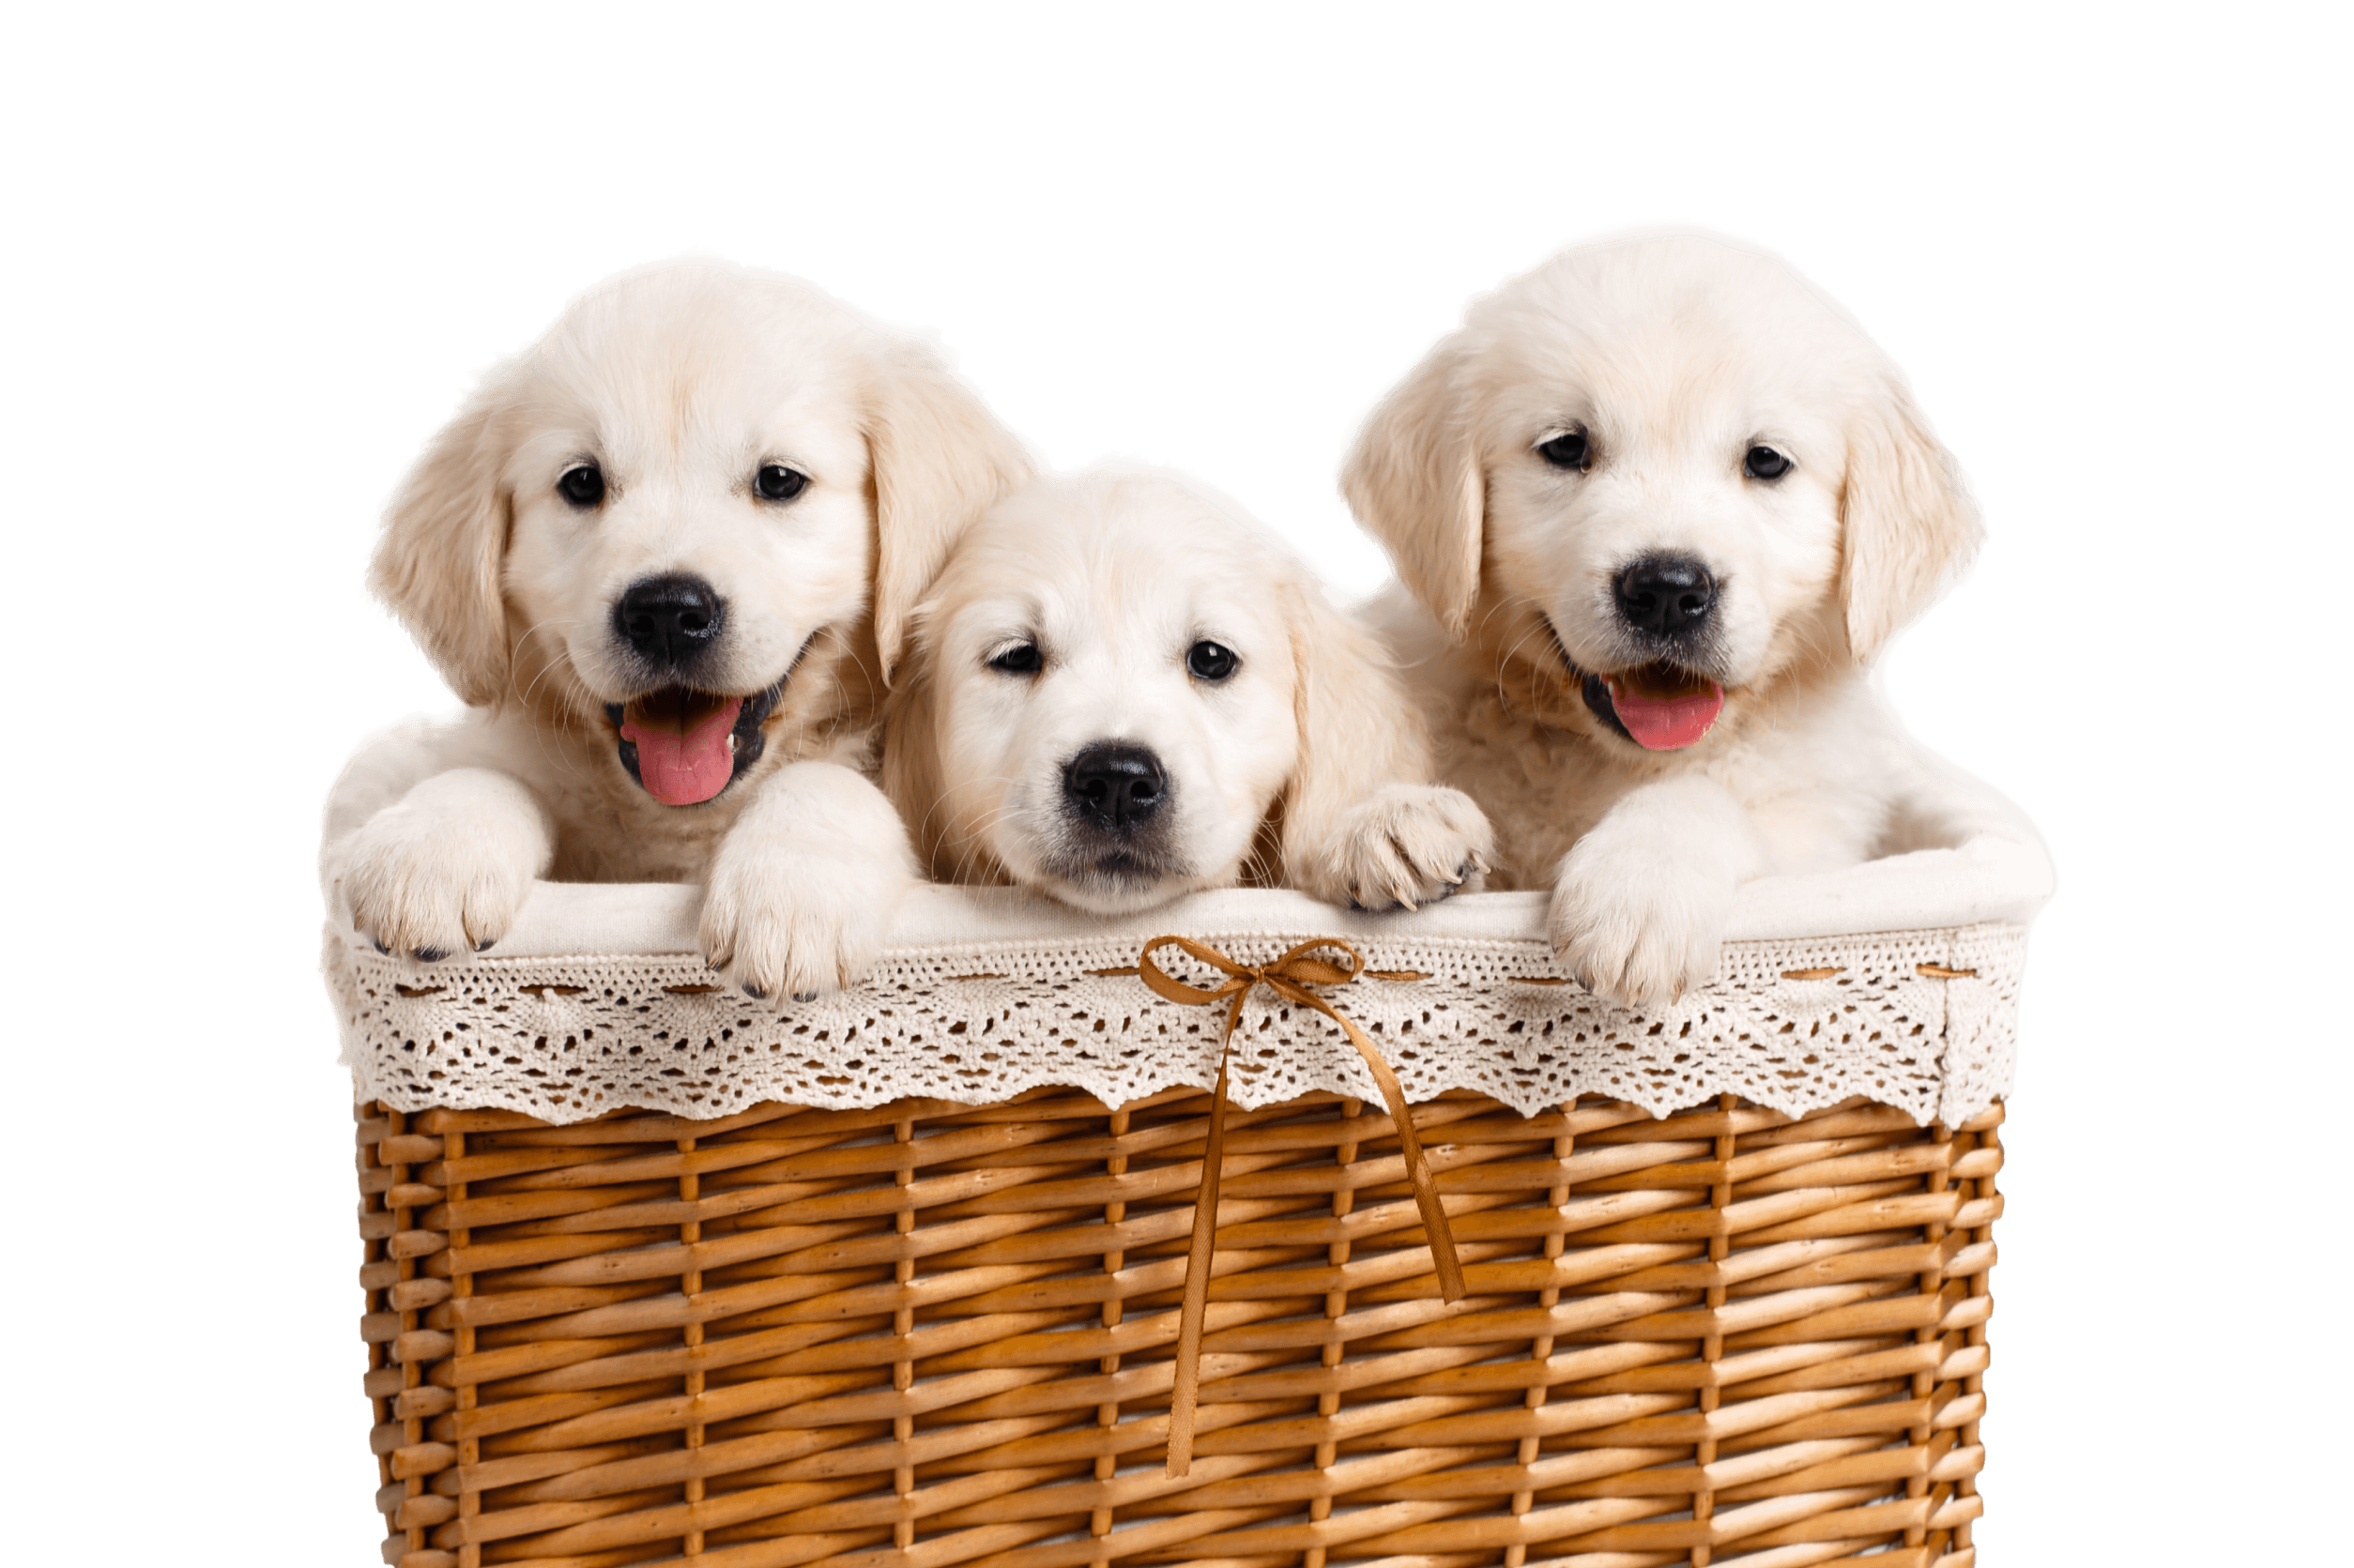 Three puppies sitting in a basket.